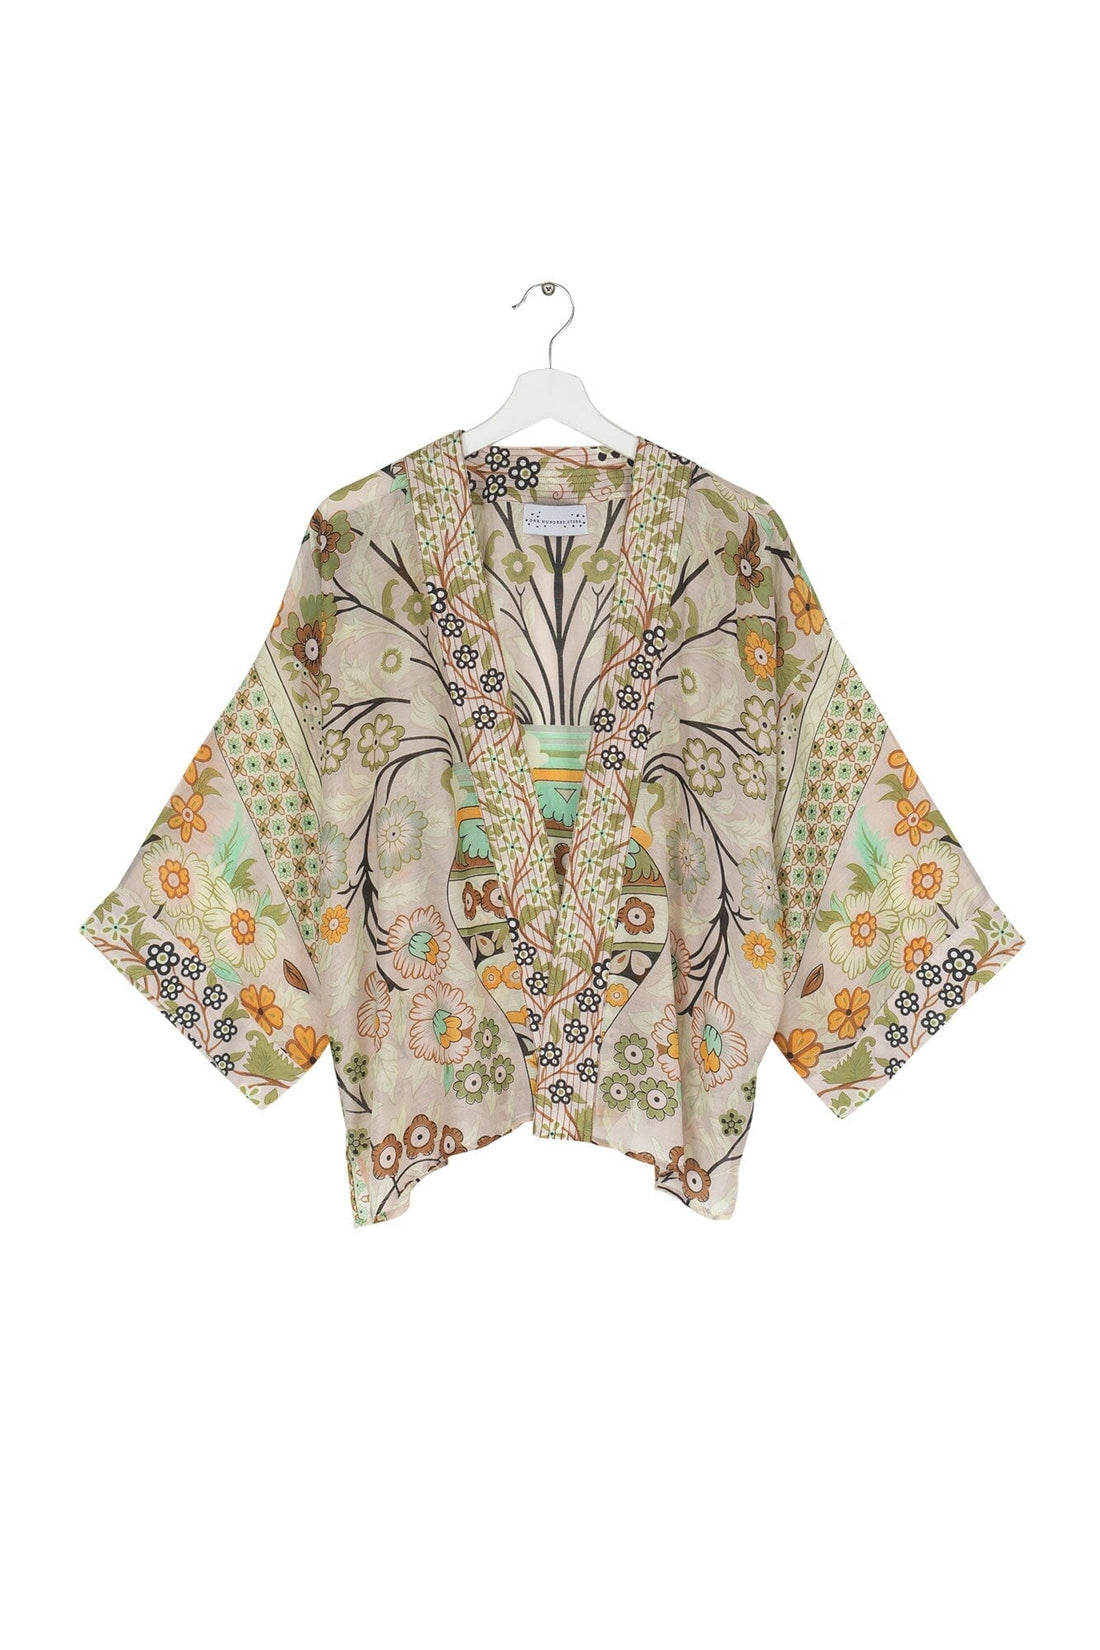 Flower Arch Short Lightweight Kimono in Sage by One Hundred Stars - KIMFWASAG Kimonos One Hundred Stars